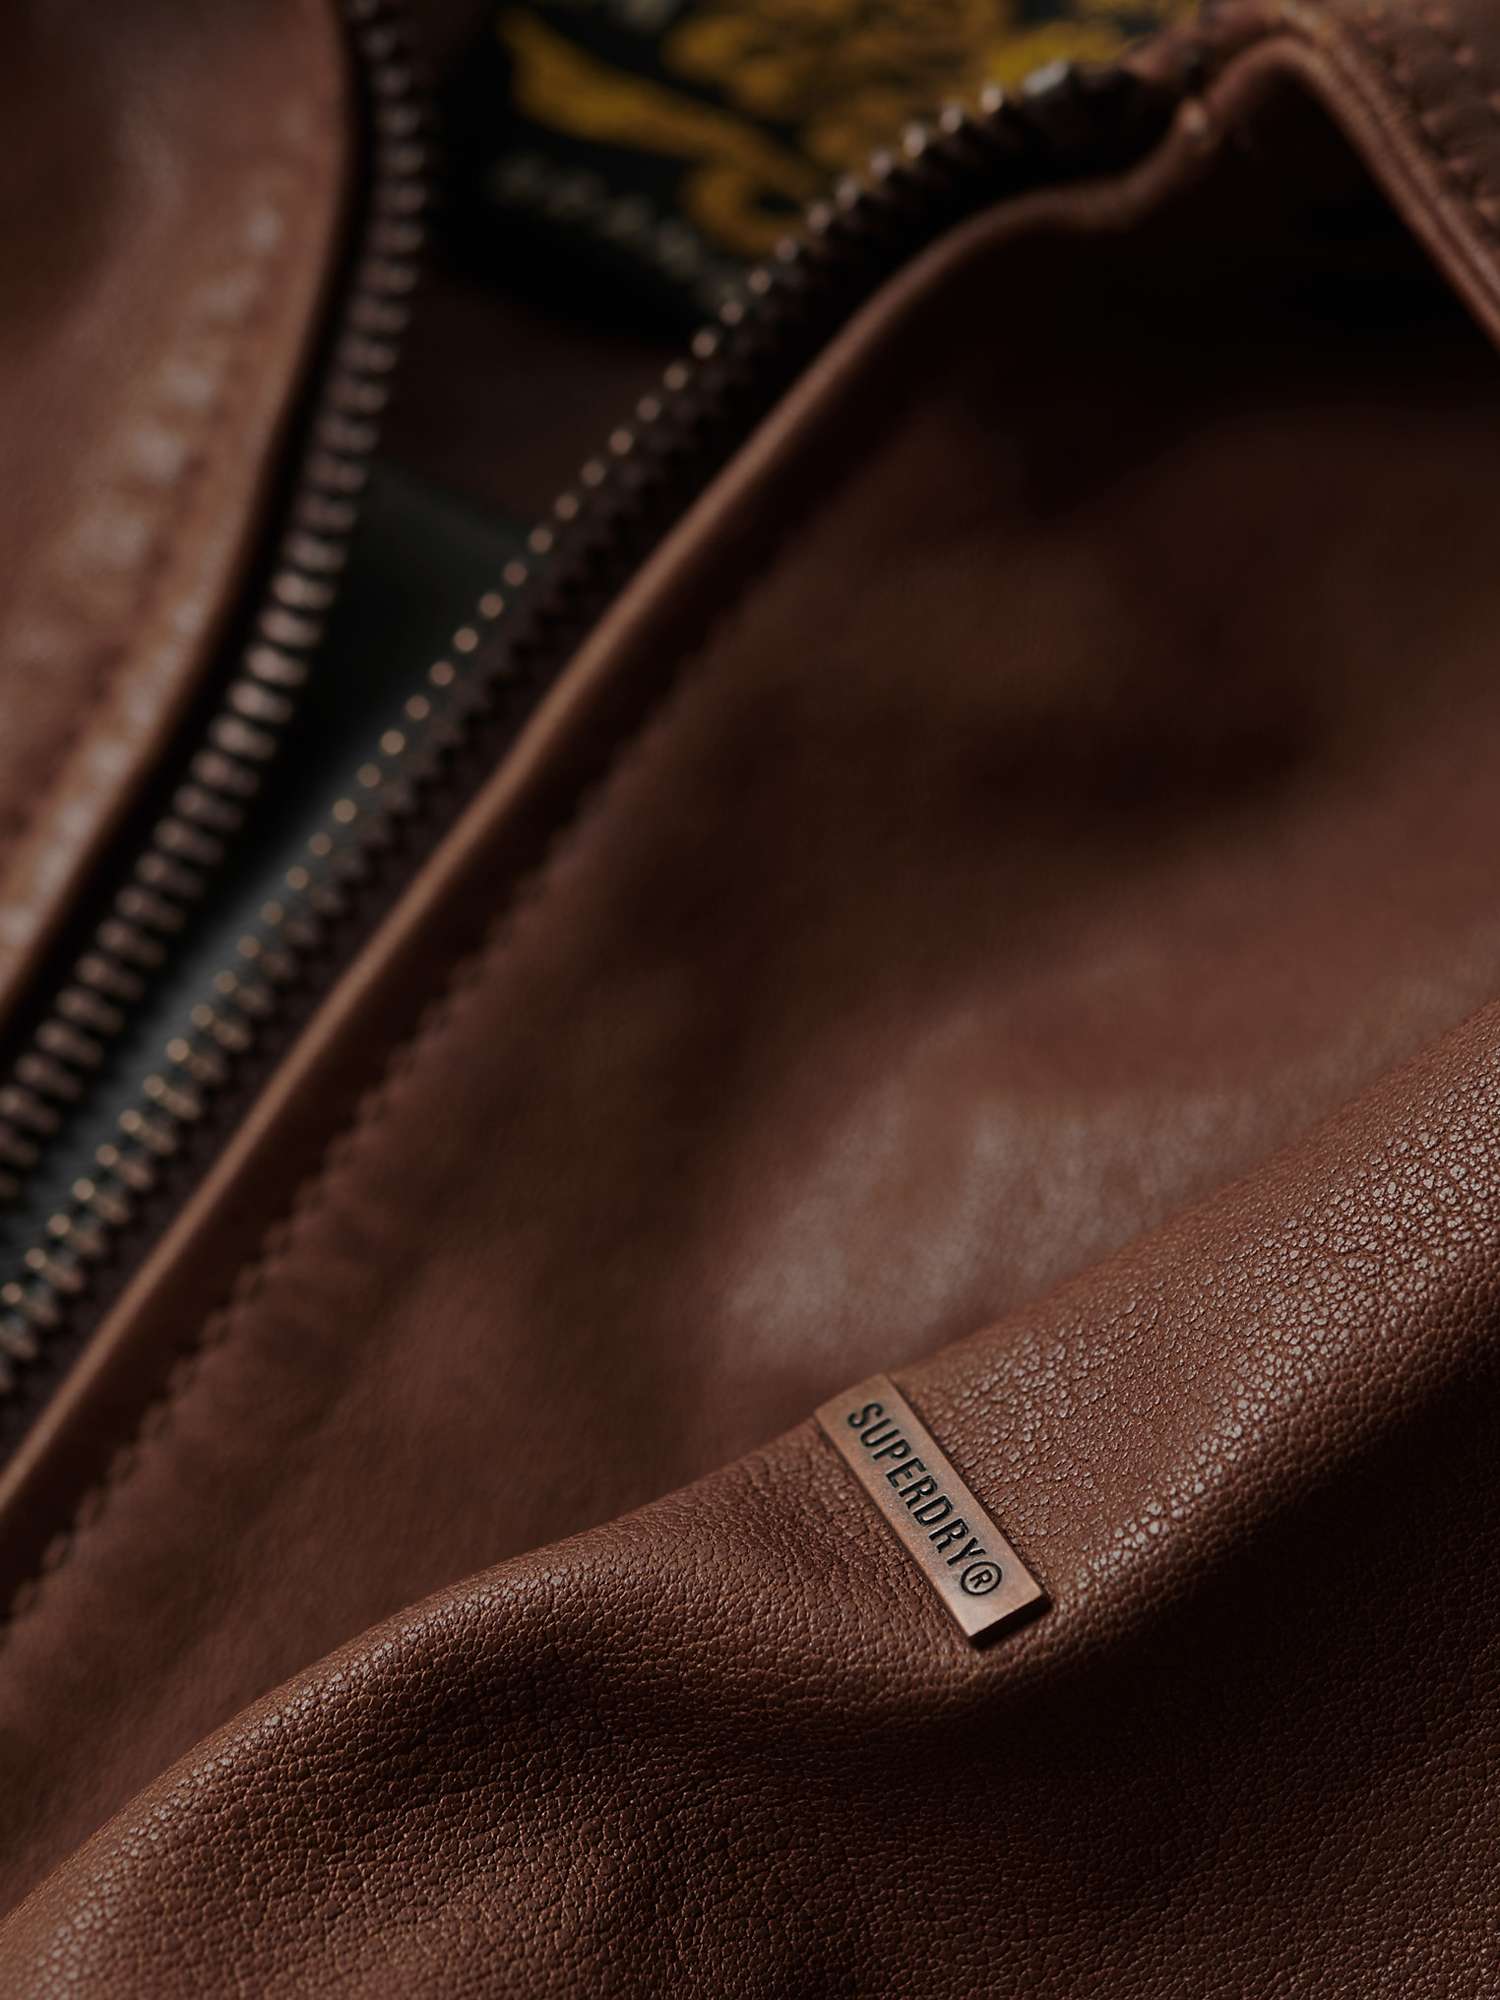 Buy Superdry 70s Leather Jacket Online at johnlewis.com